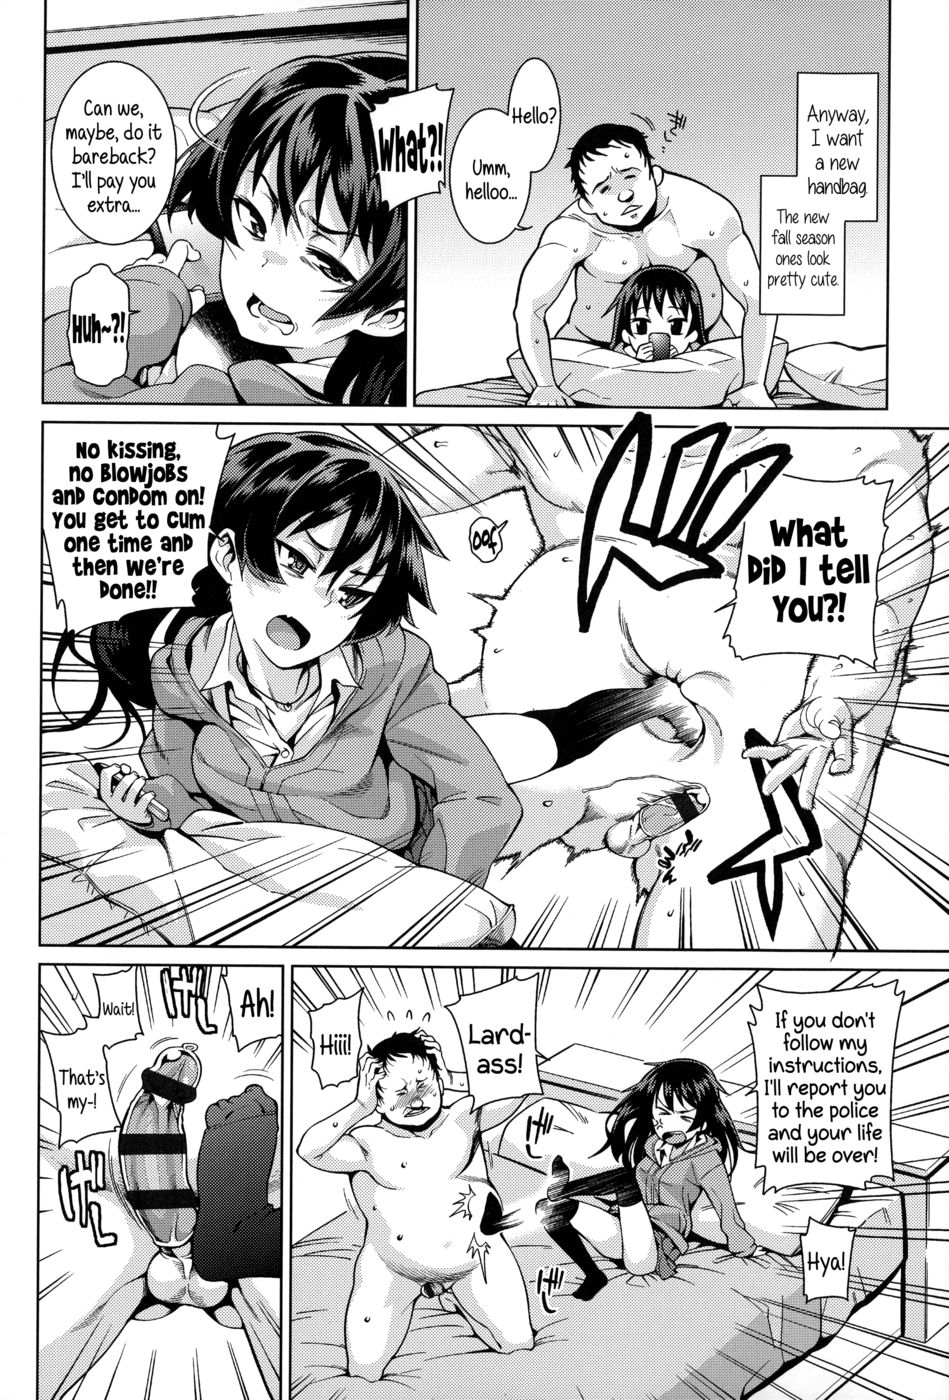 Hentai Manga Comic-Bored Girl-Read-2